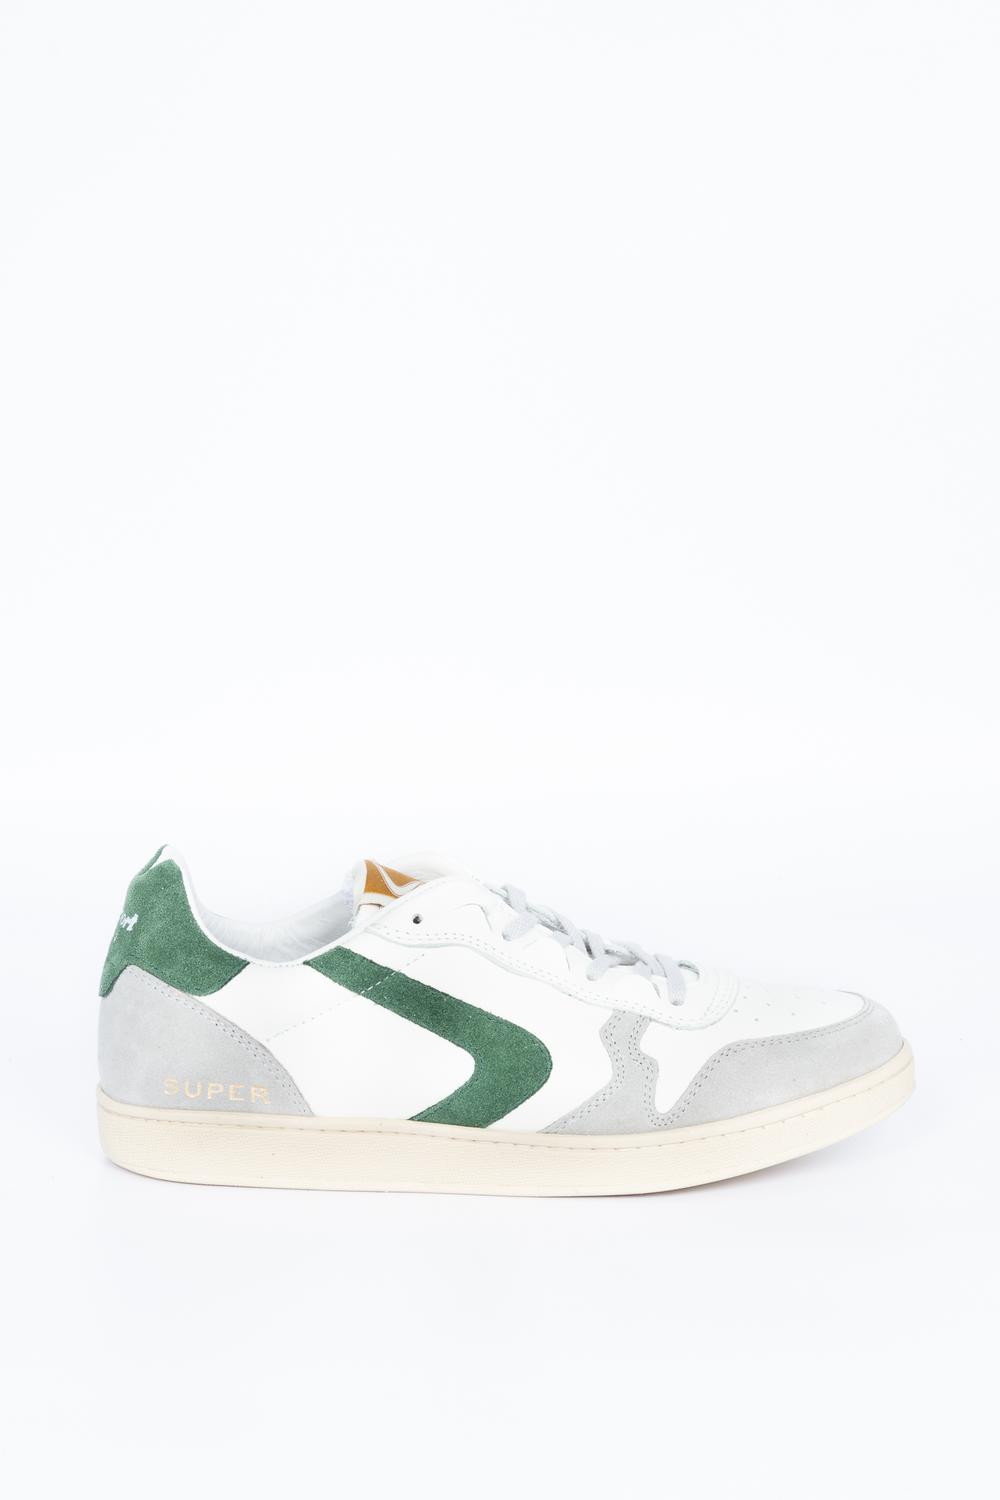 Valsport - Sneaker SUPER Suede Bianco/Verde Uomo - VSN01M 01